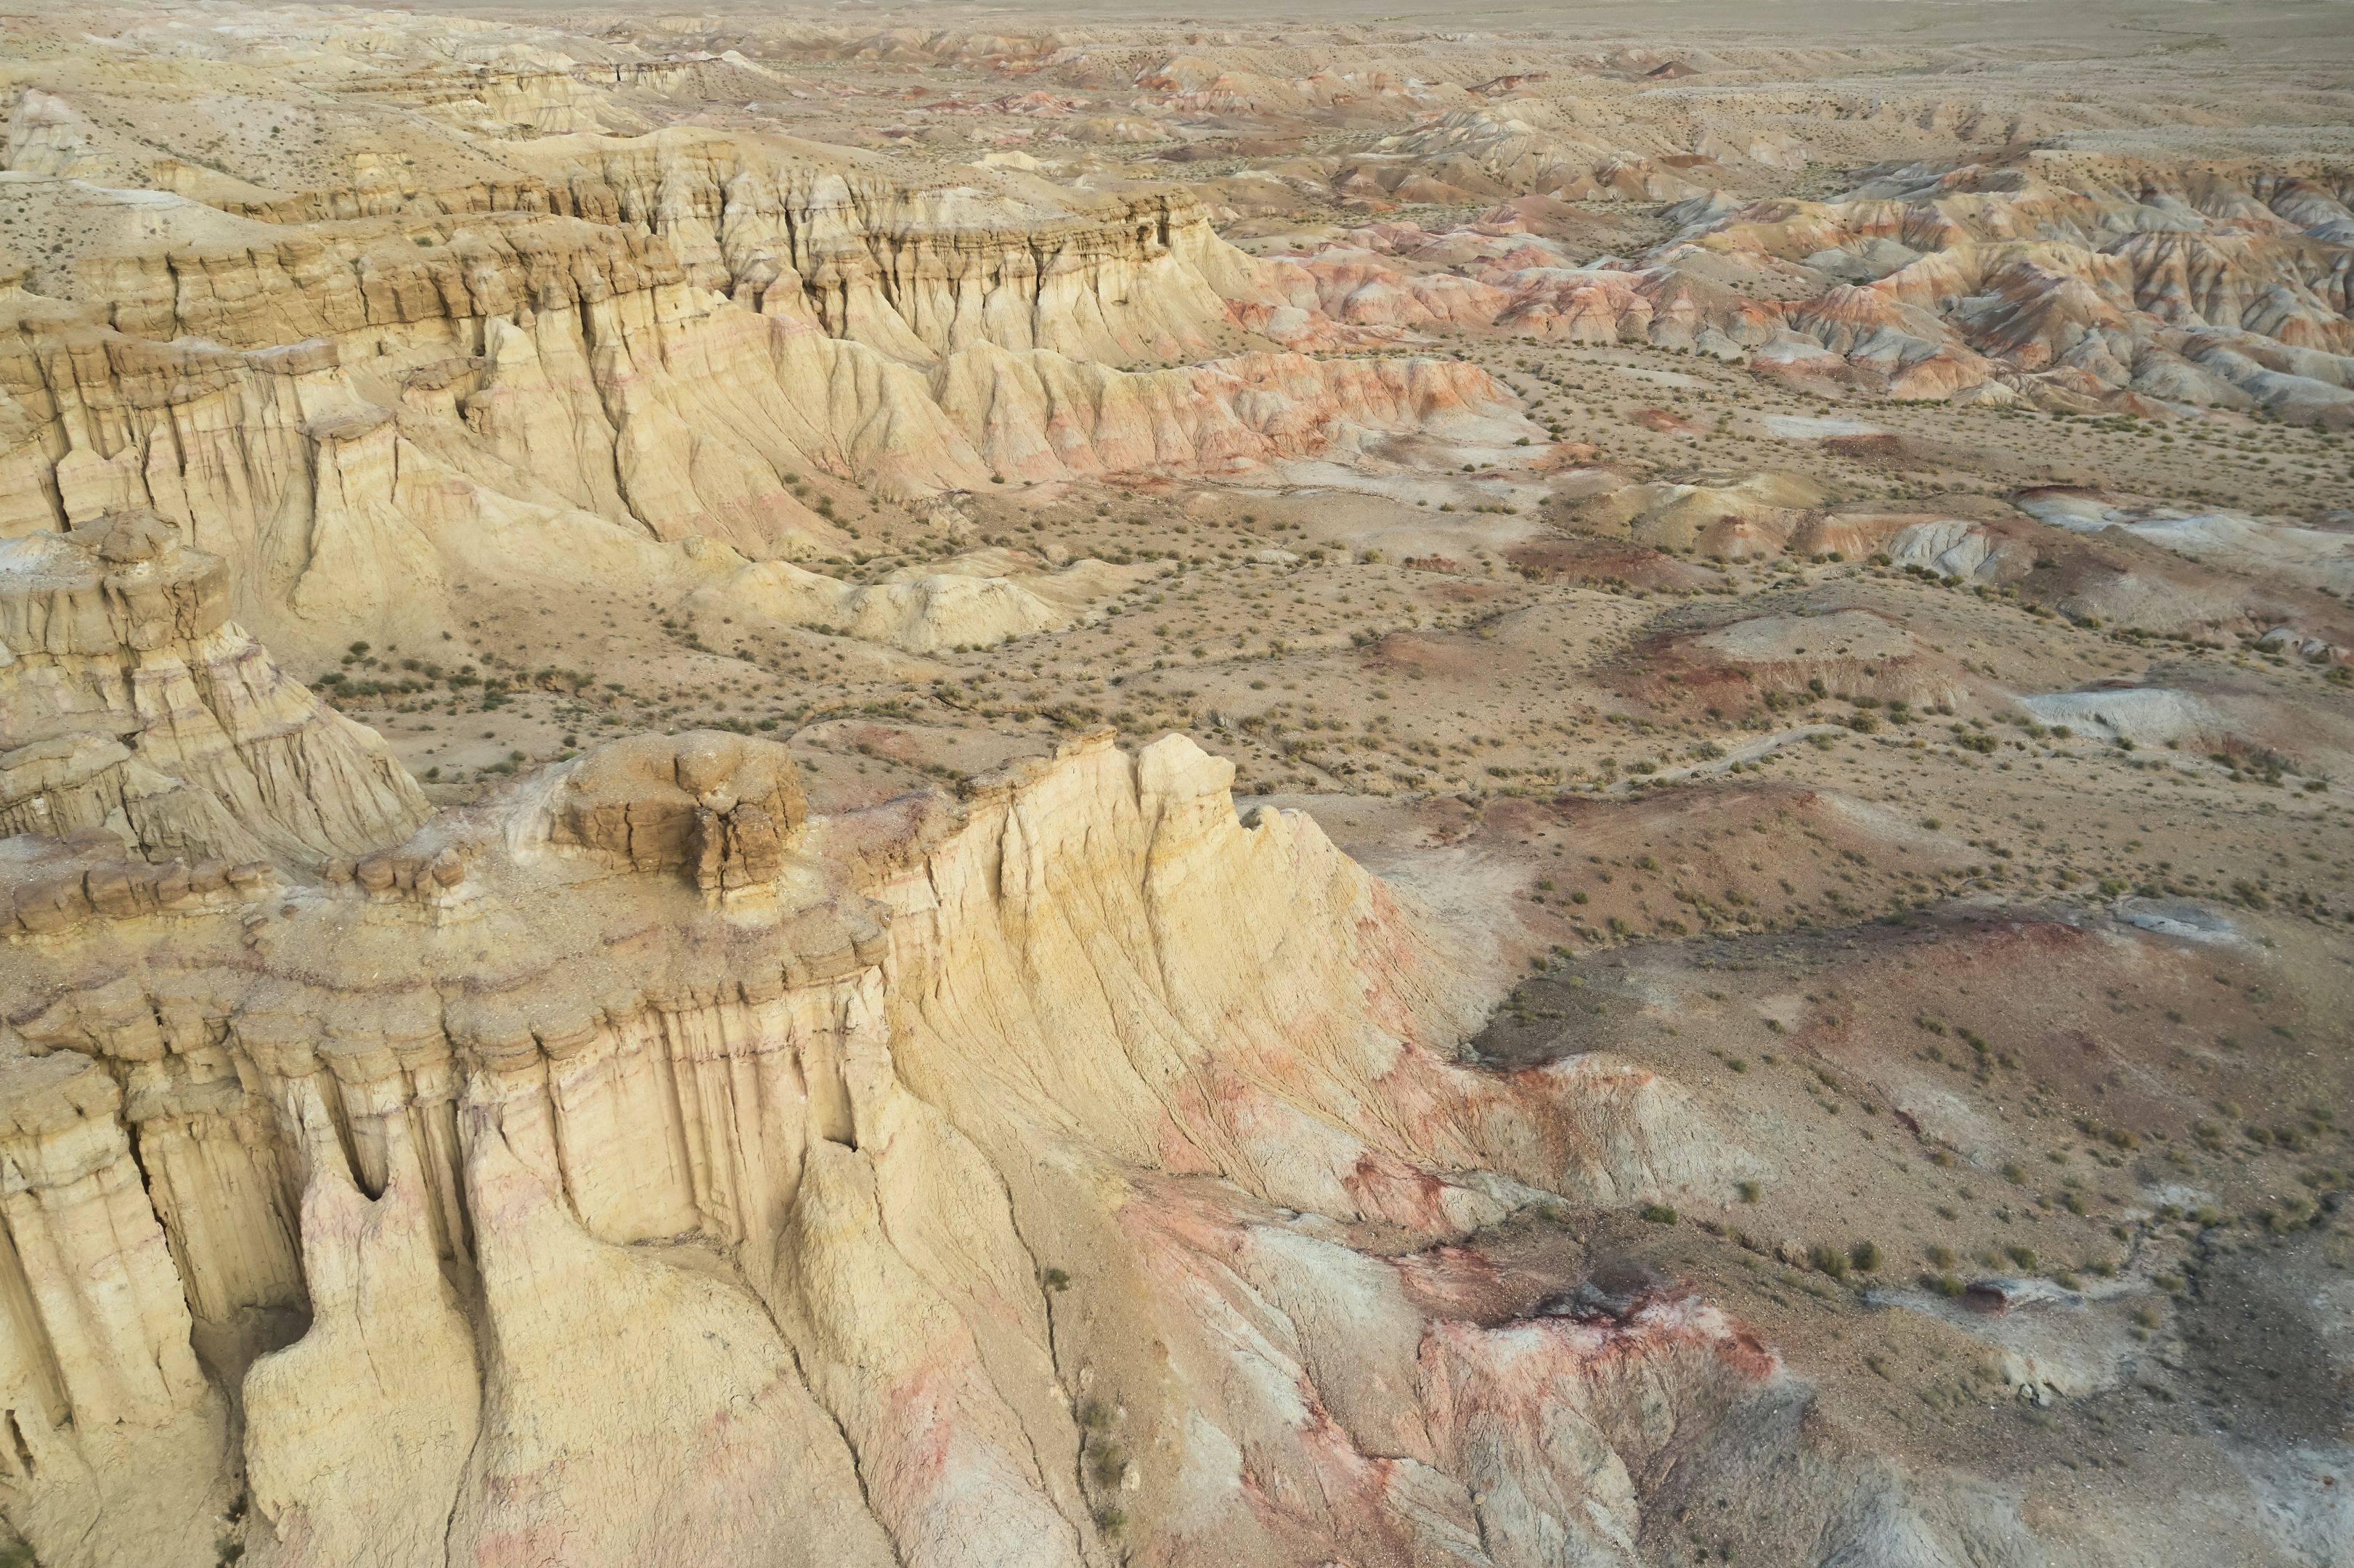 Ankunft in der Wüste – Besuch der Tsagaan Suvarga-Felswände